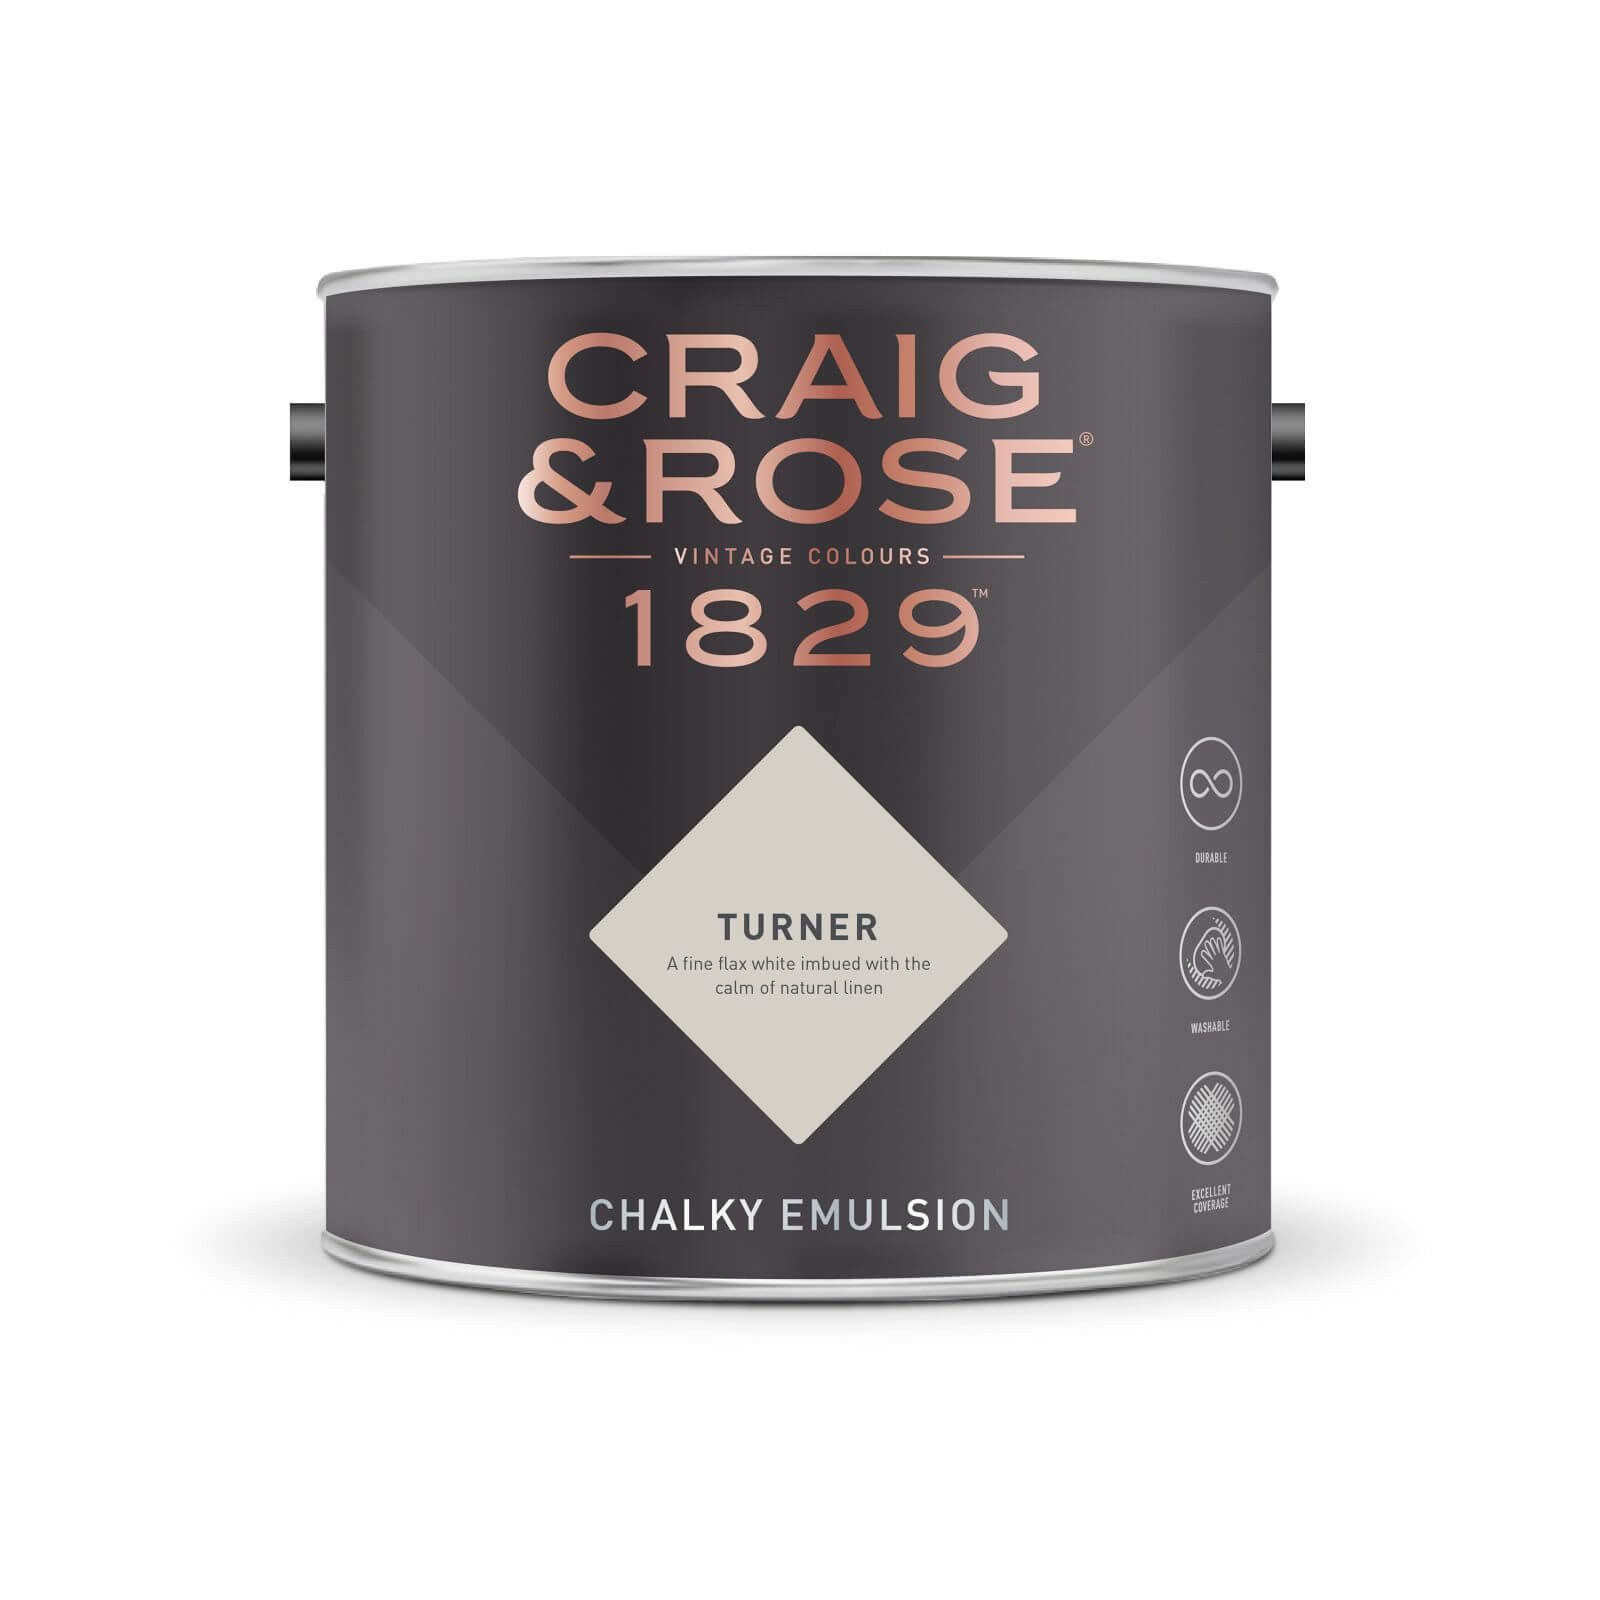 Craig & Rose 1829 Chalky Emulsion Paint Turner - Tester 50ml